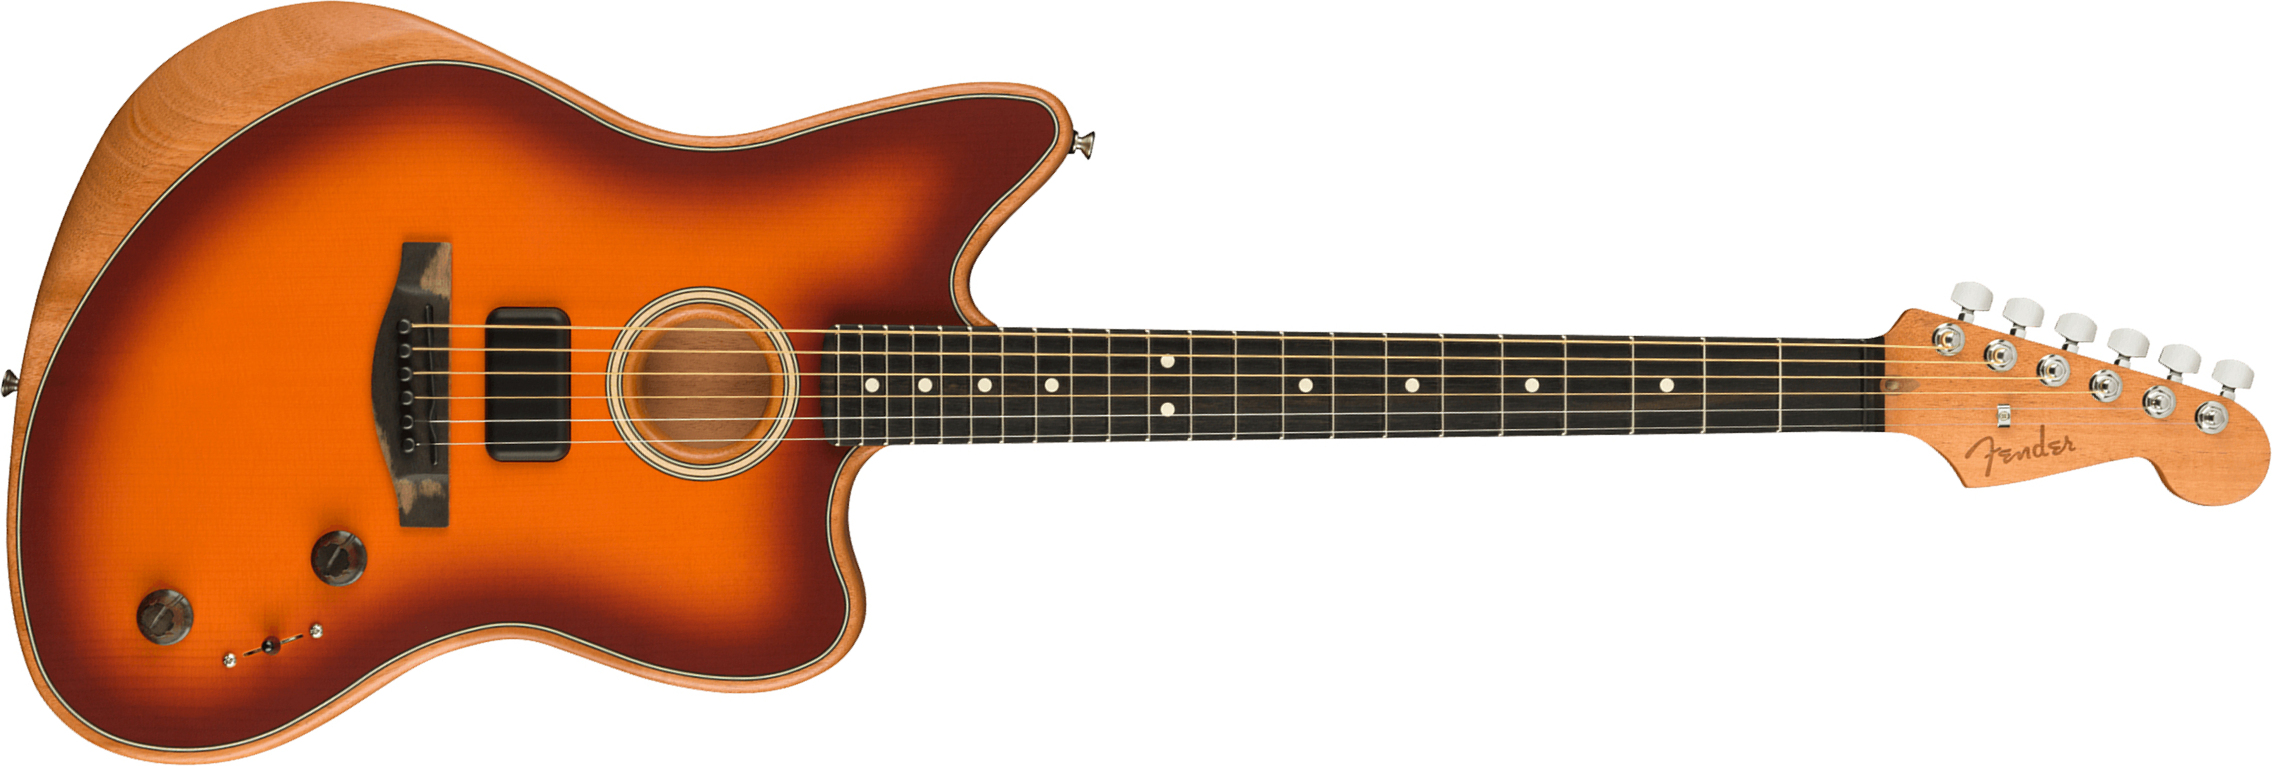 Fender American Acoustasonic Jazzmaster Usa Eb - Tobacco Sunburst - Electro acoustic guitar - Main picture